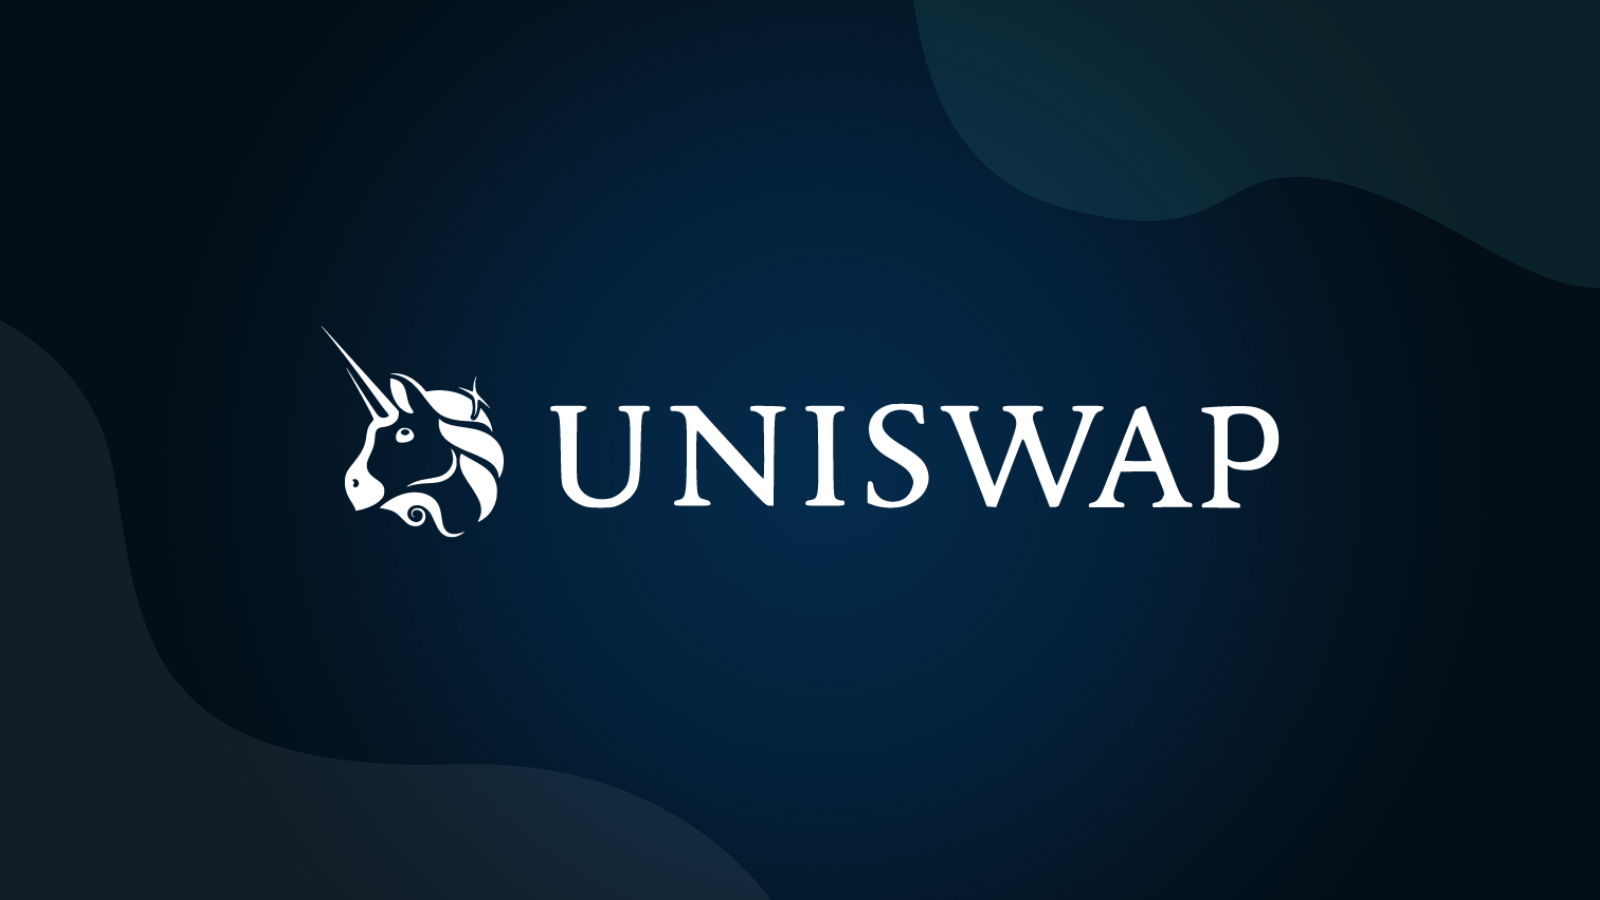 Uniswap’s Innovative Tech Stack